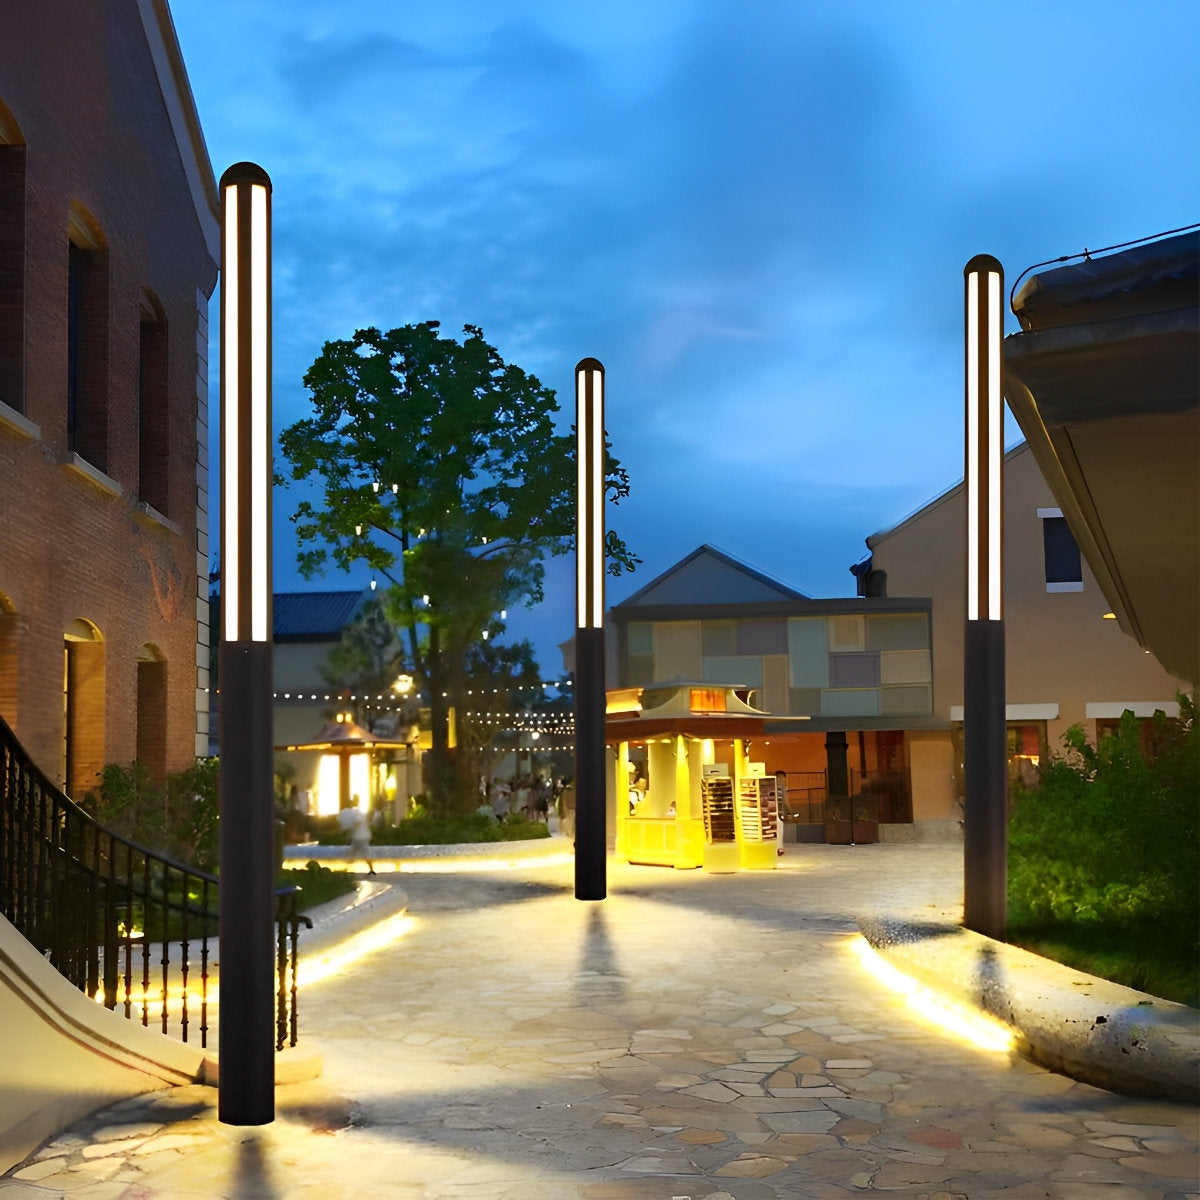 Minimalist Waterproof LED Black Modern Outdoor Pole Lights Street Lighting - Flyachilles